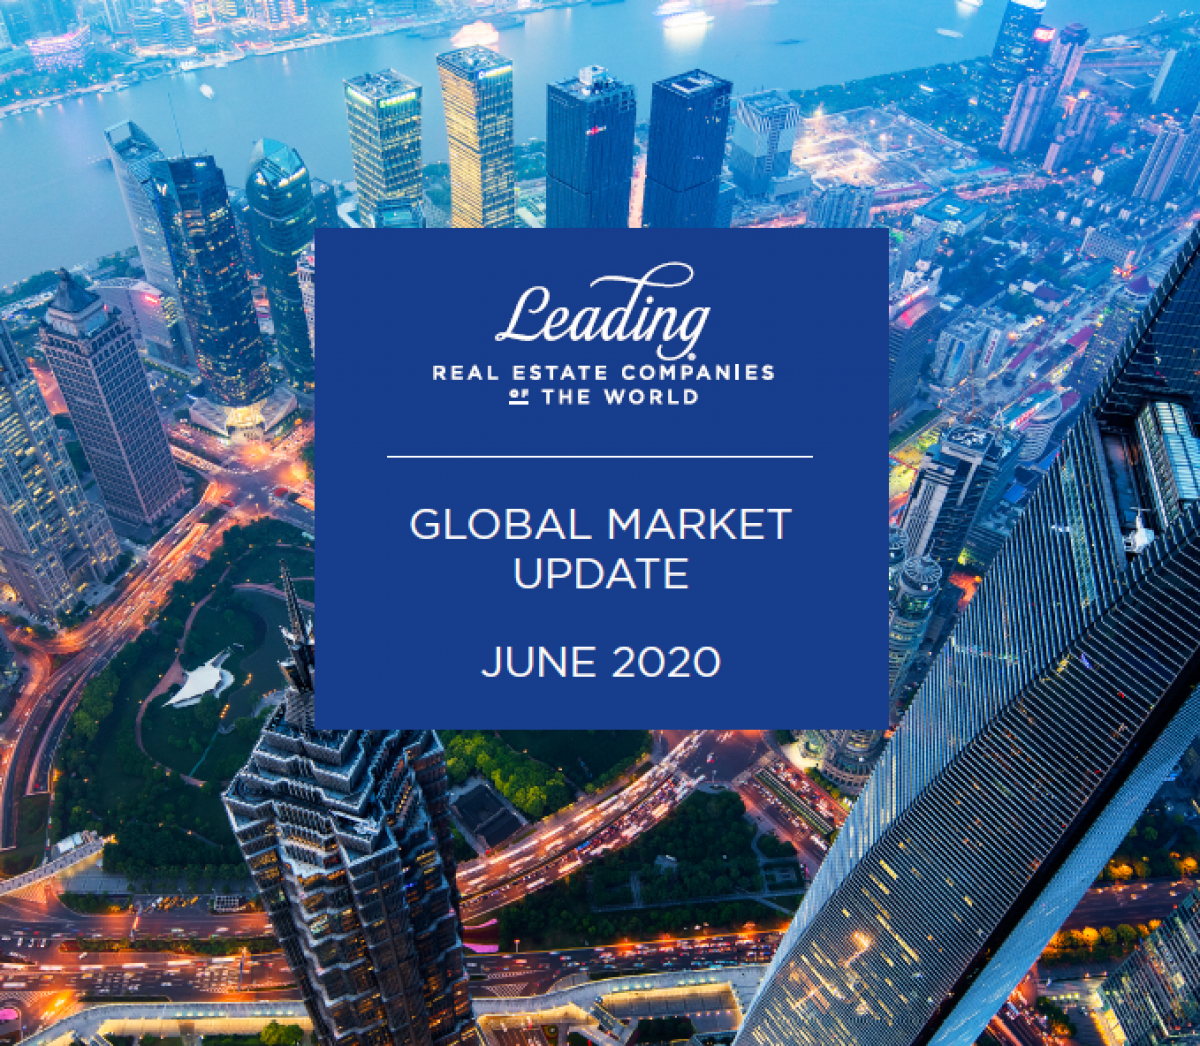 Global Market Update - Analysis of Leading RE, June 2020